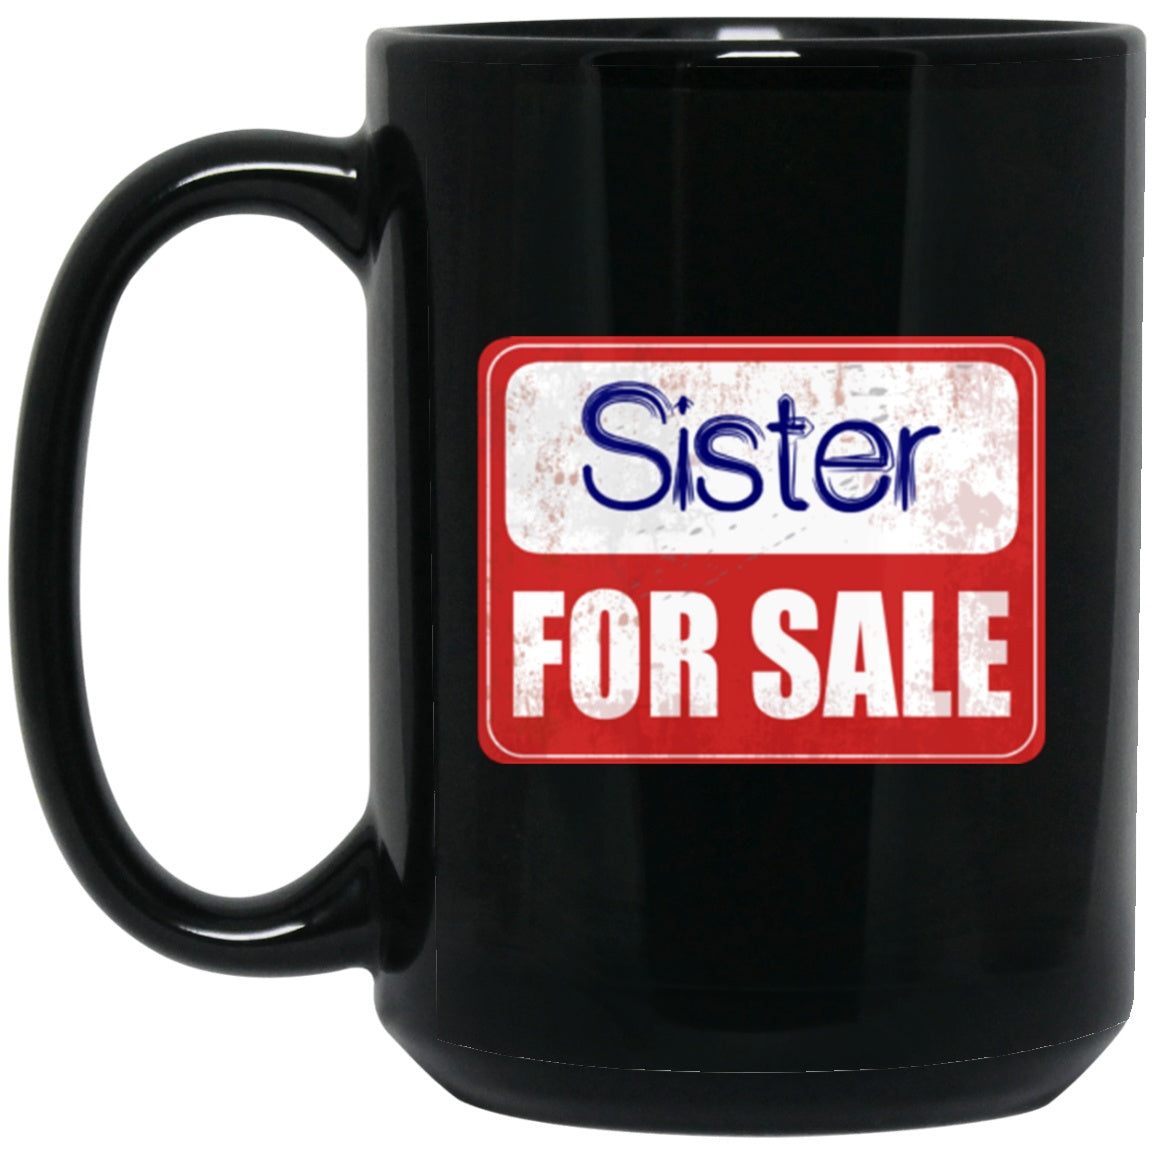 Funny Sister Mug For Sale Black Coffee Mugs - GoneBold.gift